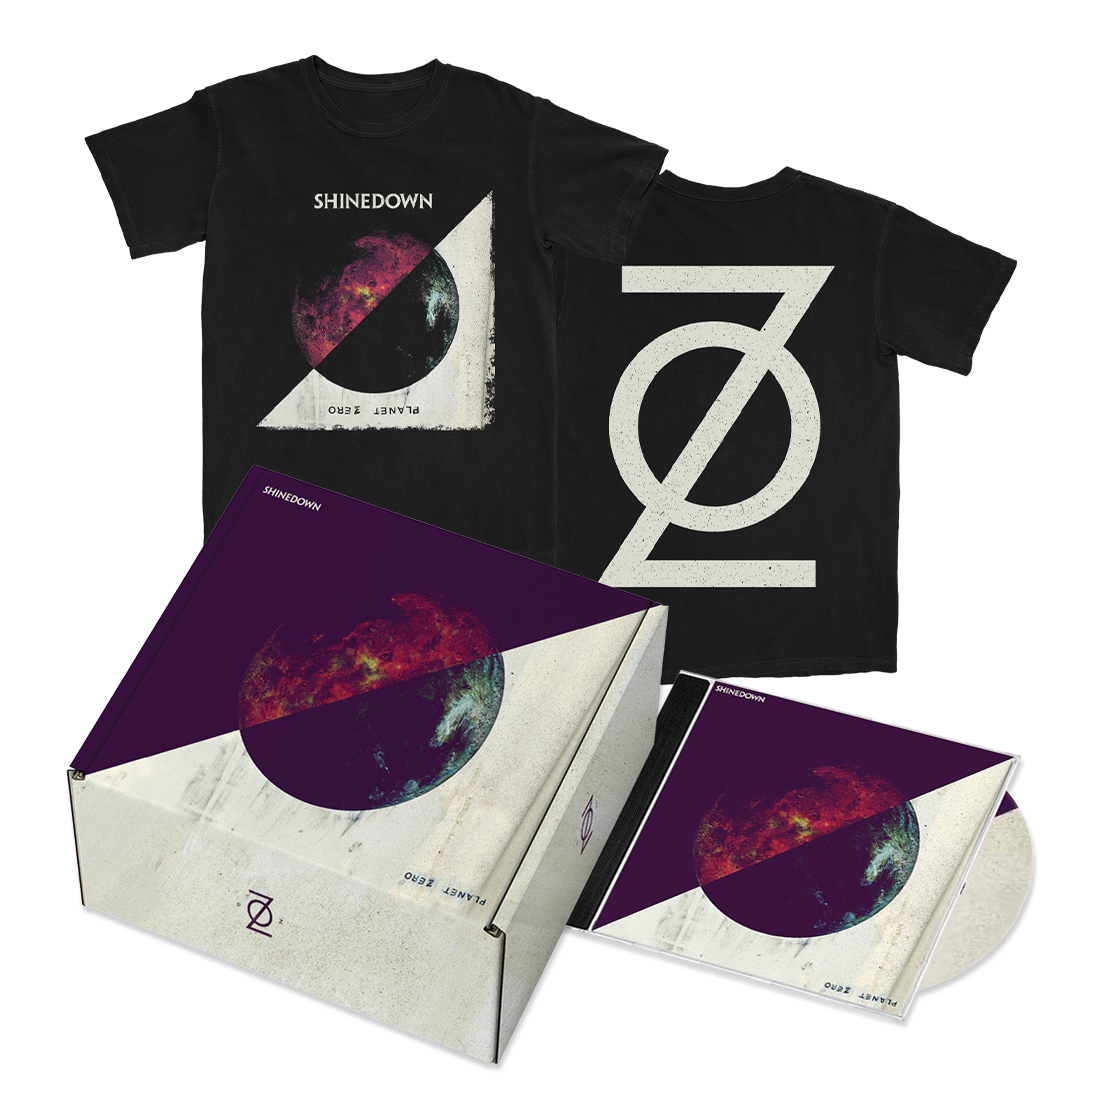 Planet Zero Black T-Shirt CD Box